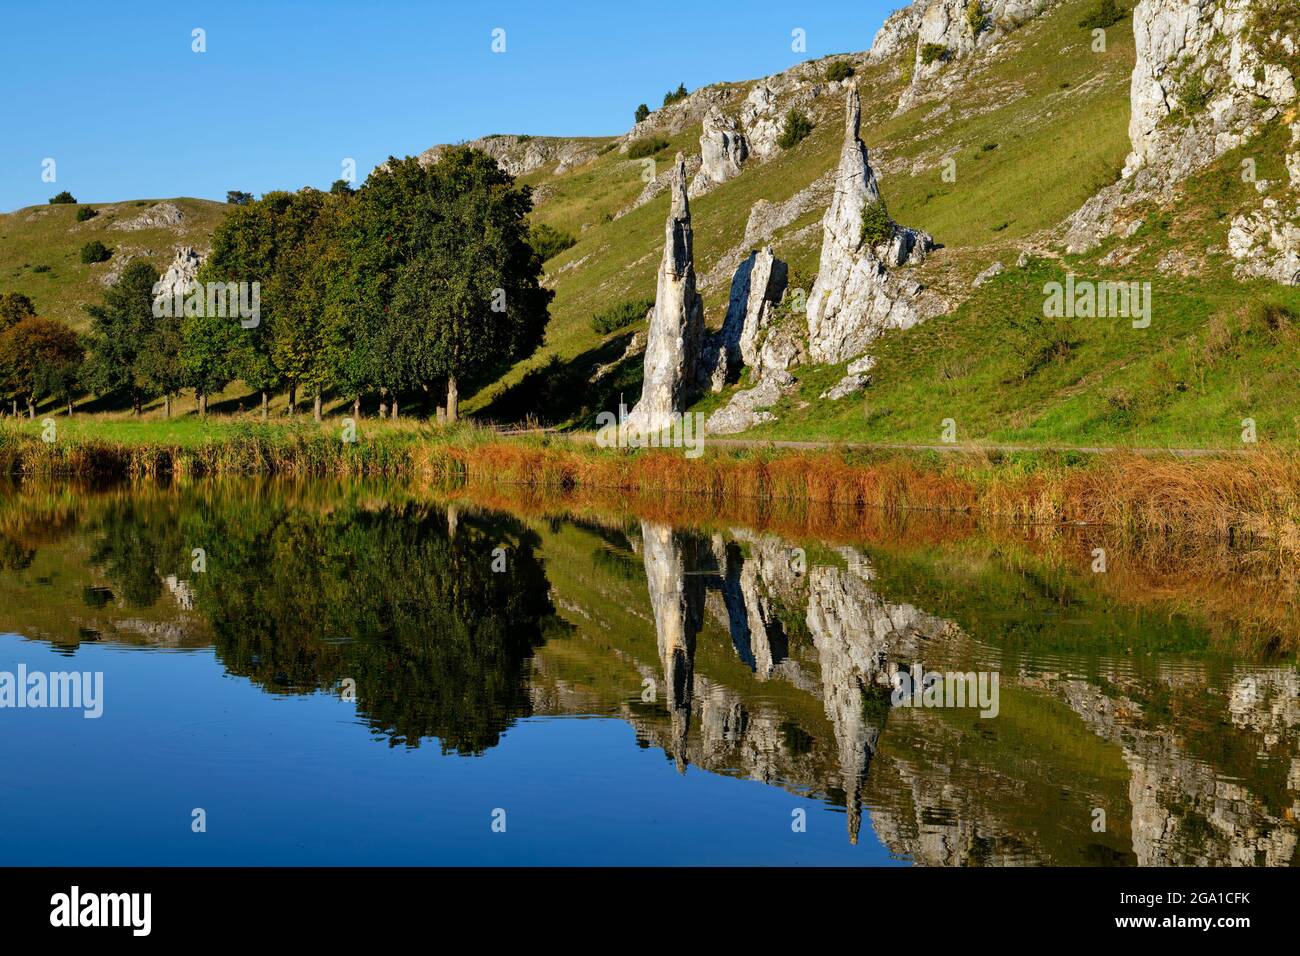 Eselsburg Valley near Herbrechtingen, rockformation 'Stony maiden' (Steinerne Jungfrauen) reflecting in pond, Baden-Württemberg, Germany Stock Photo